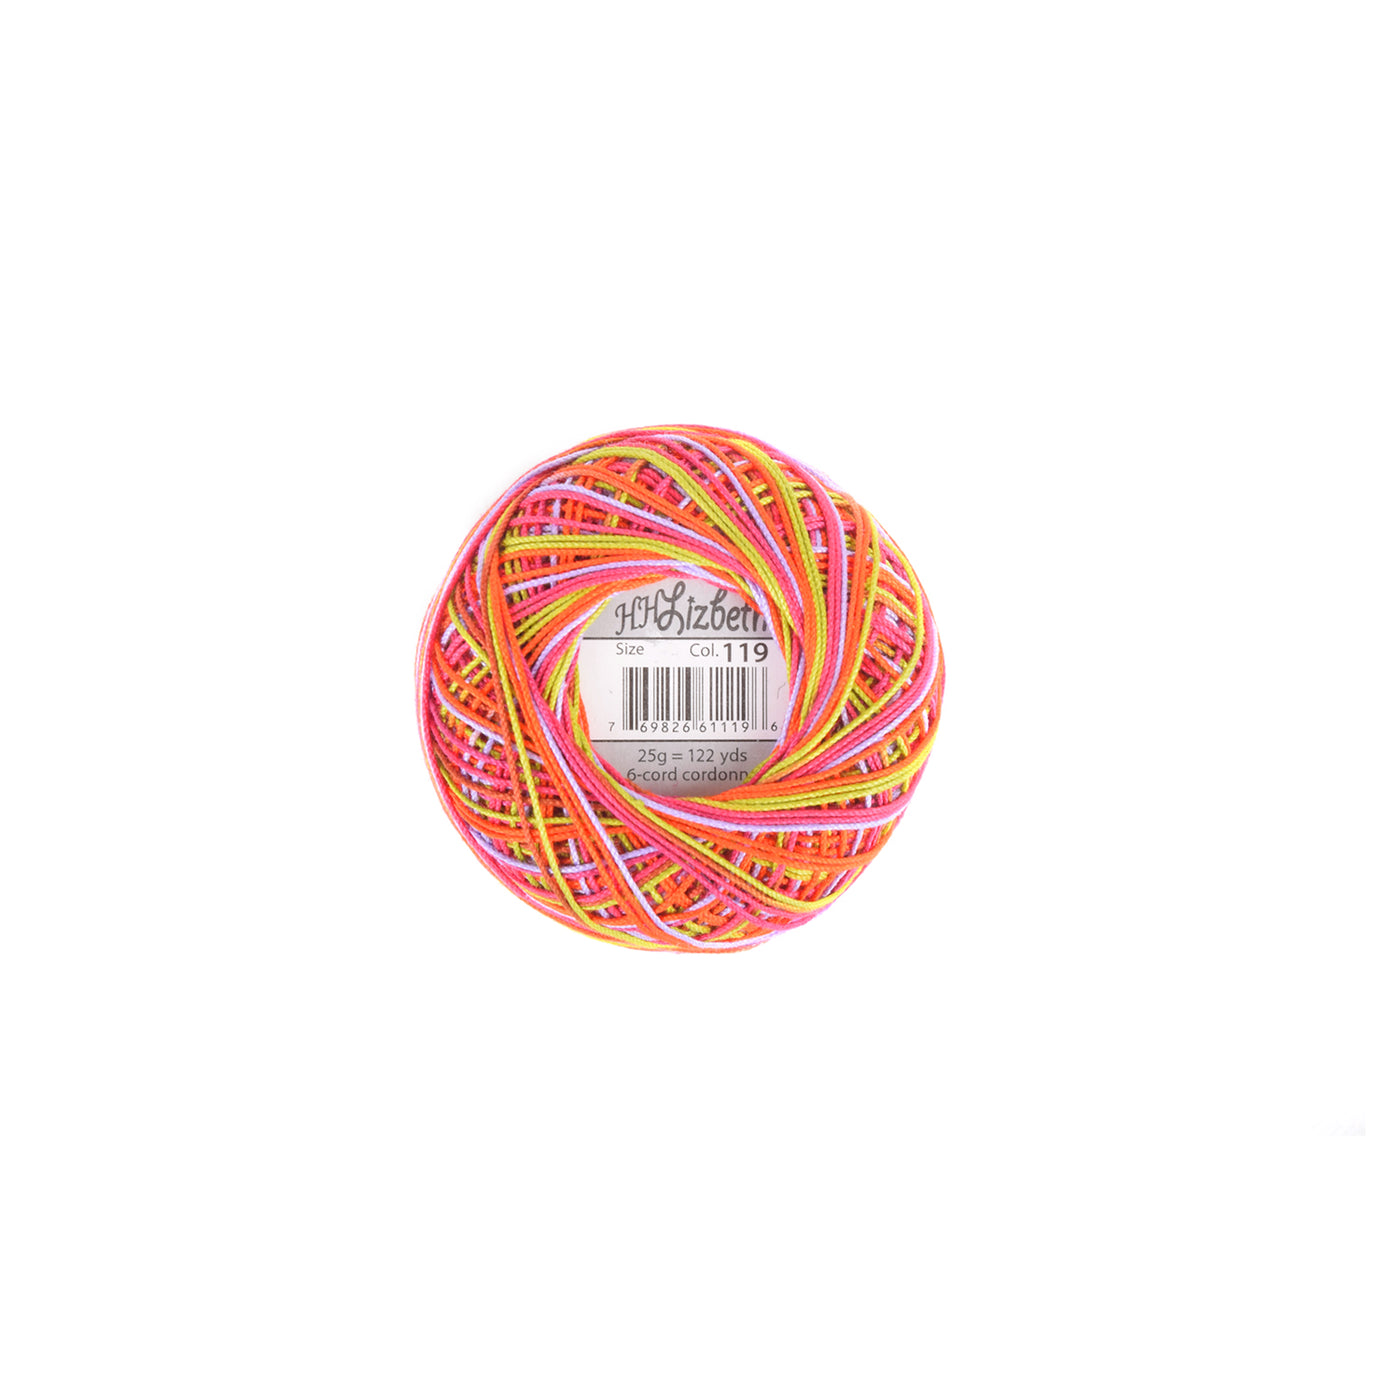 Lizbeth 100% Egyptian Cotton cordonnet thread Jelly Bean (665285460013)